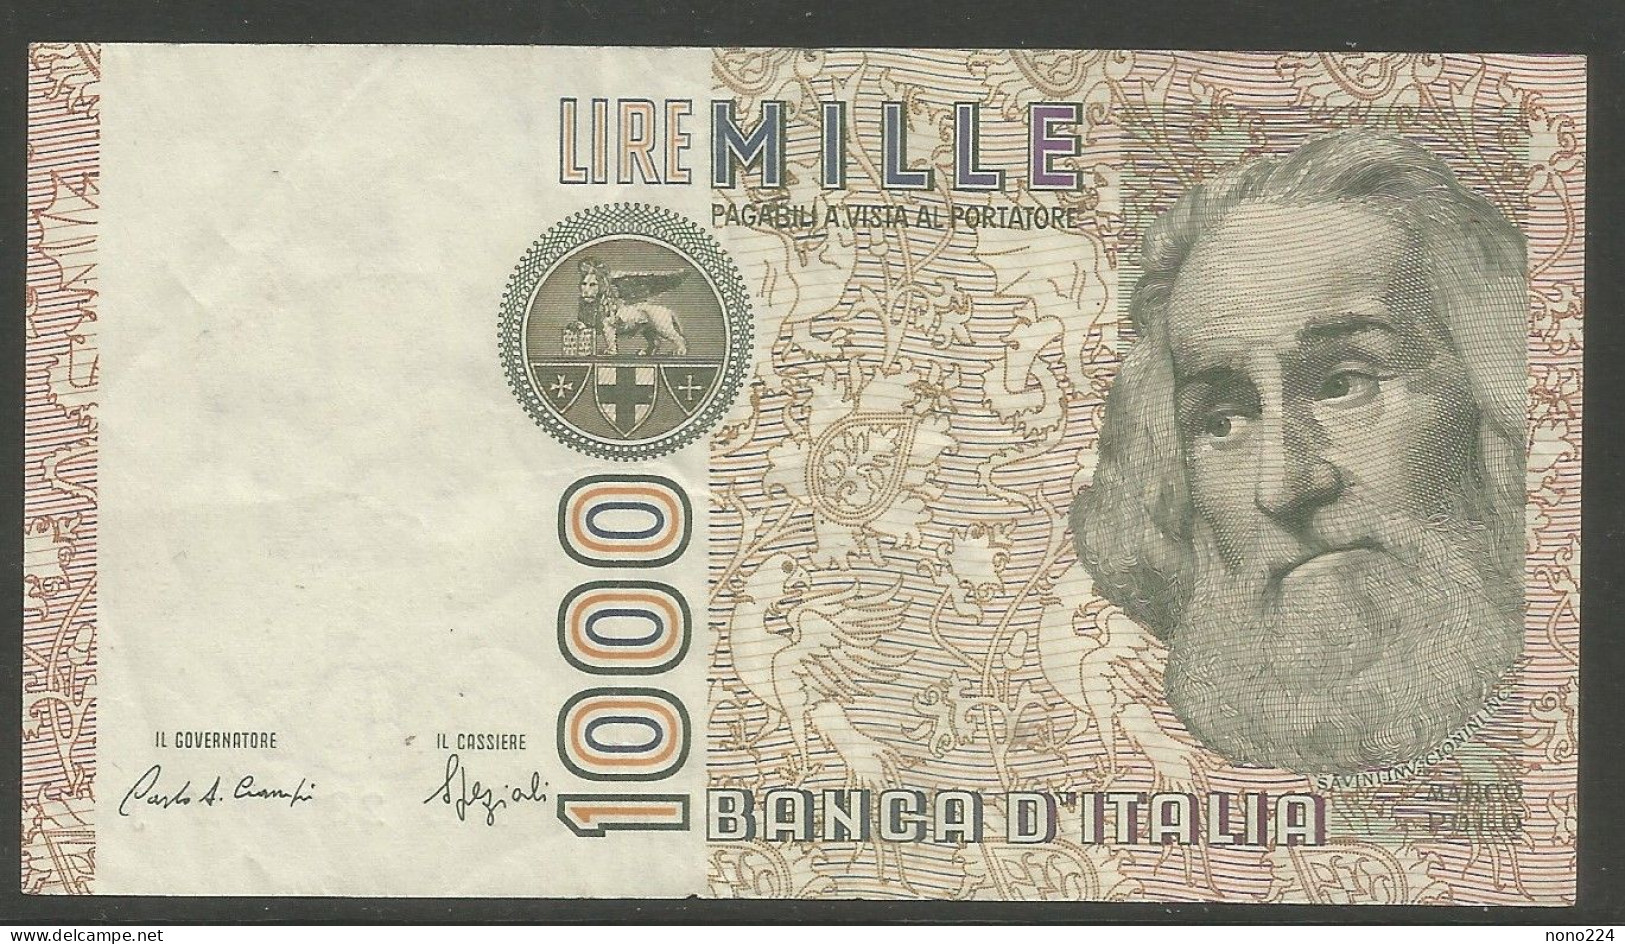 Billet De 1982 ( Italie 1000 Lire ) - 1000 Lire